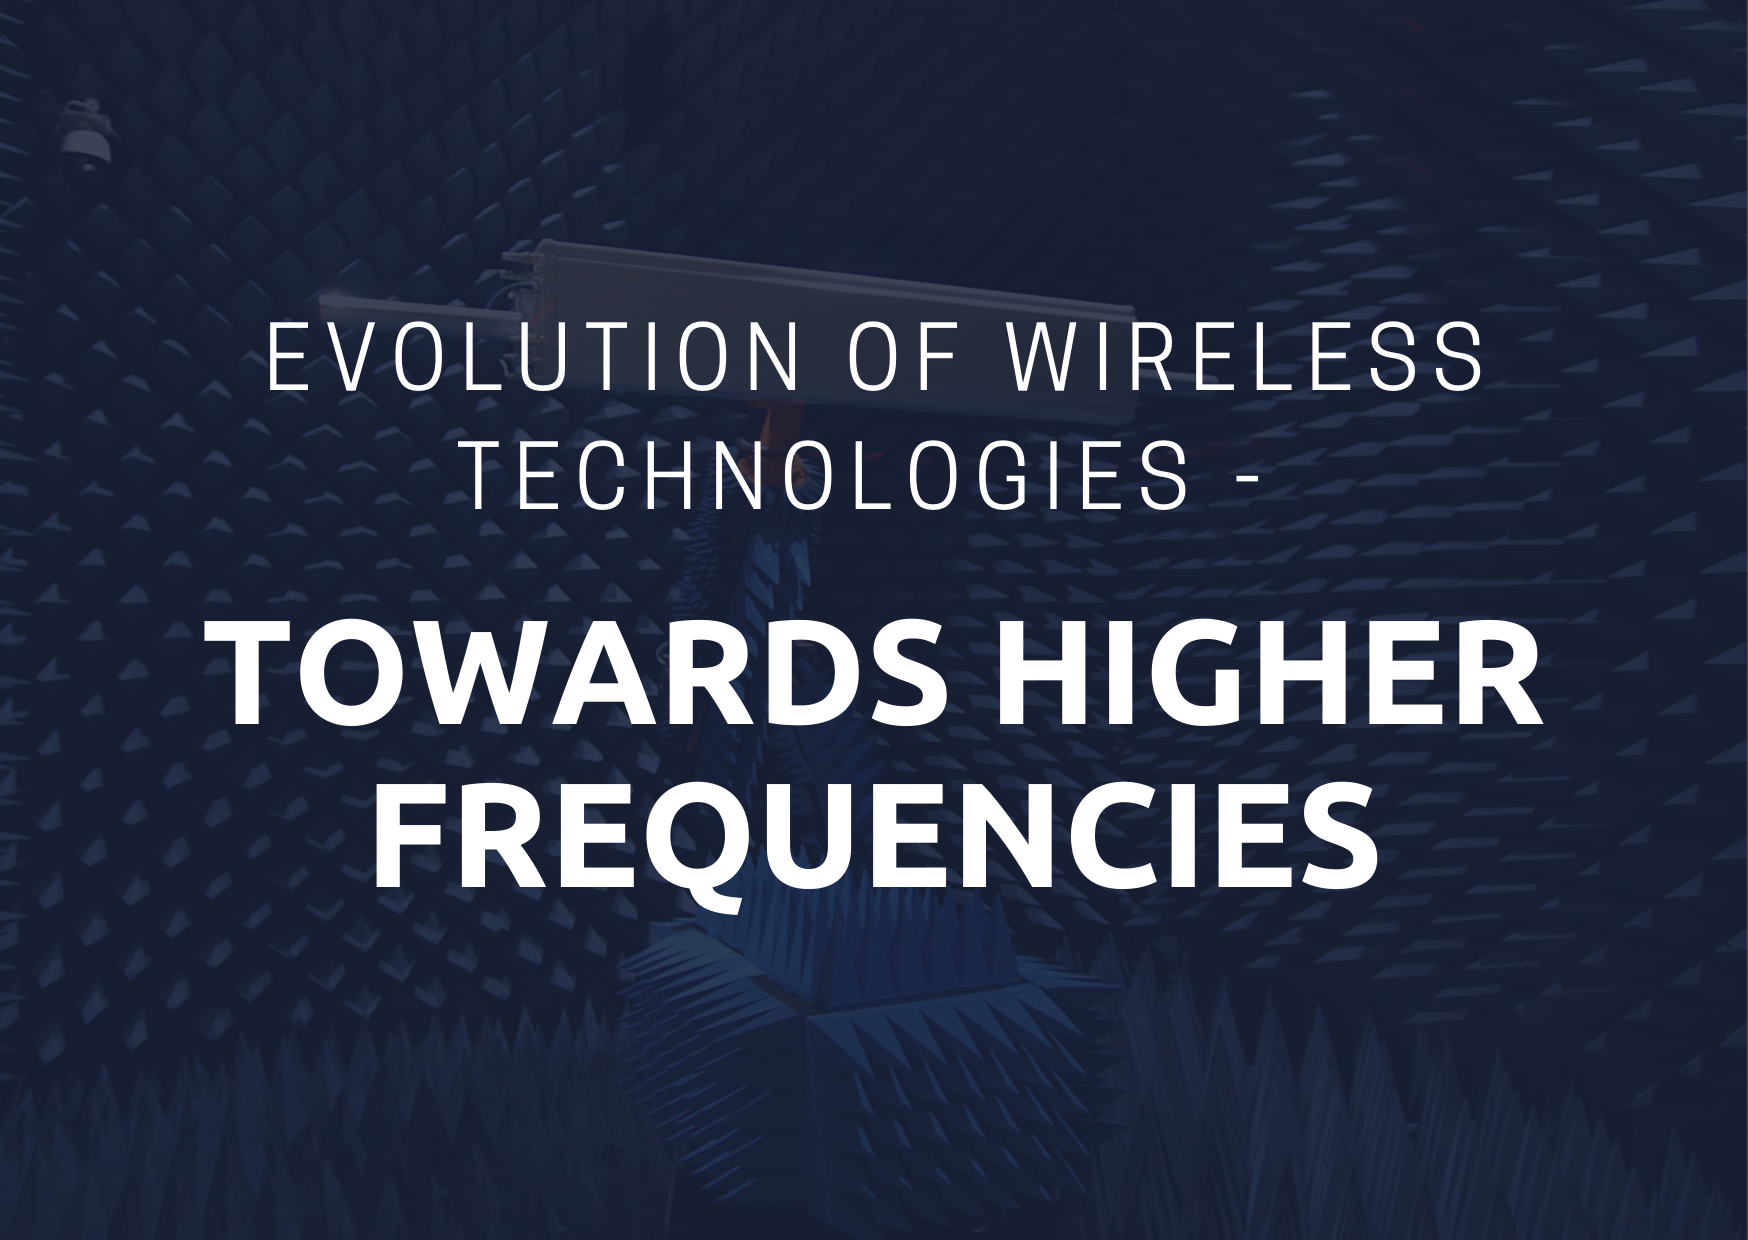 Evolution of wireless technologies.